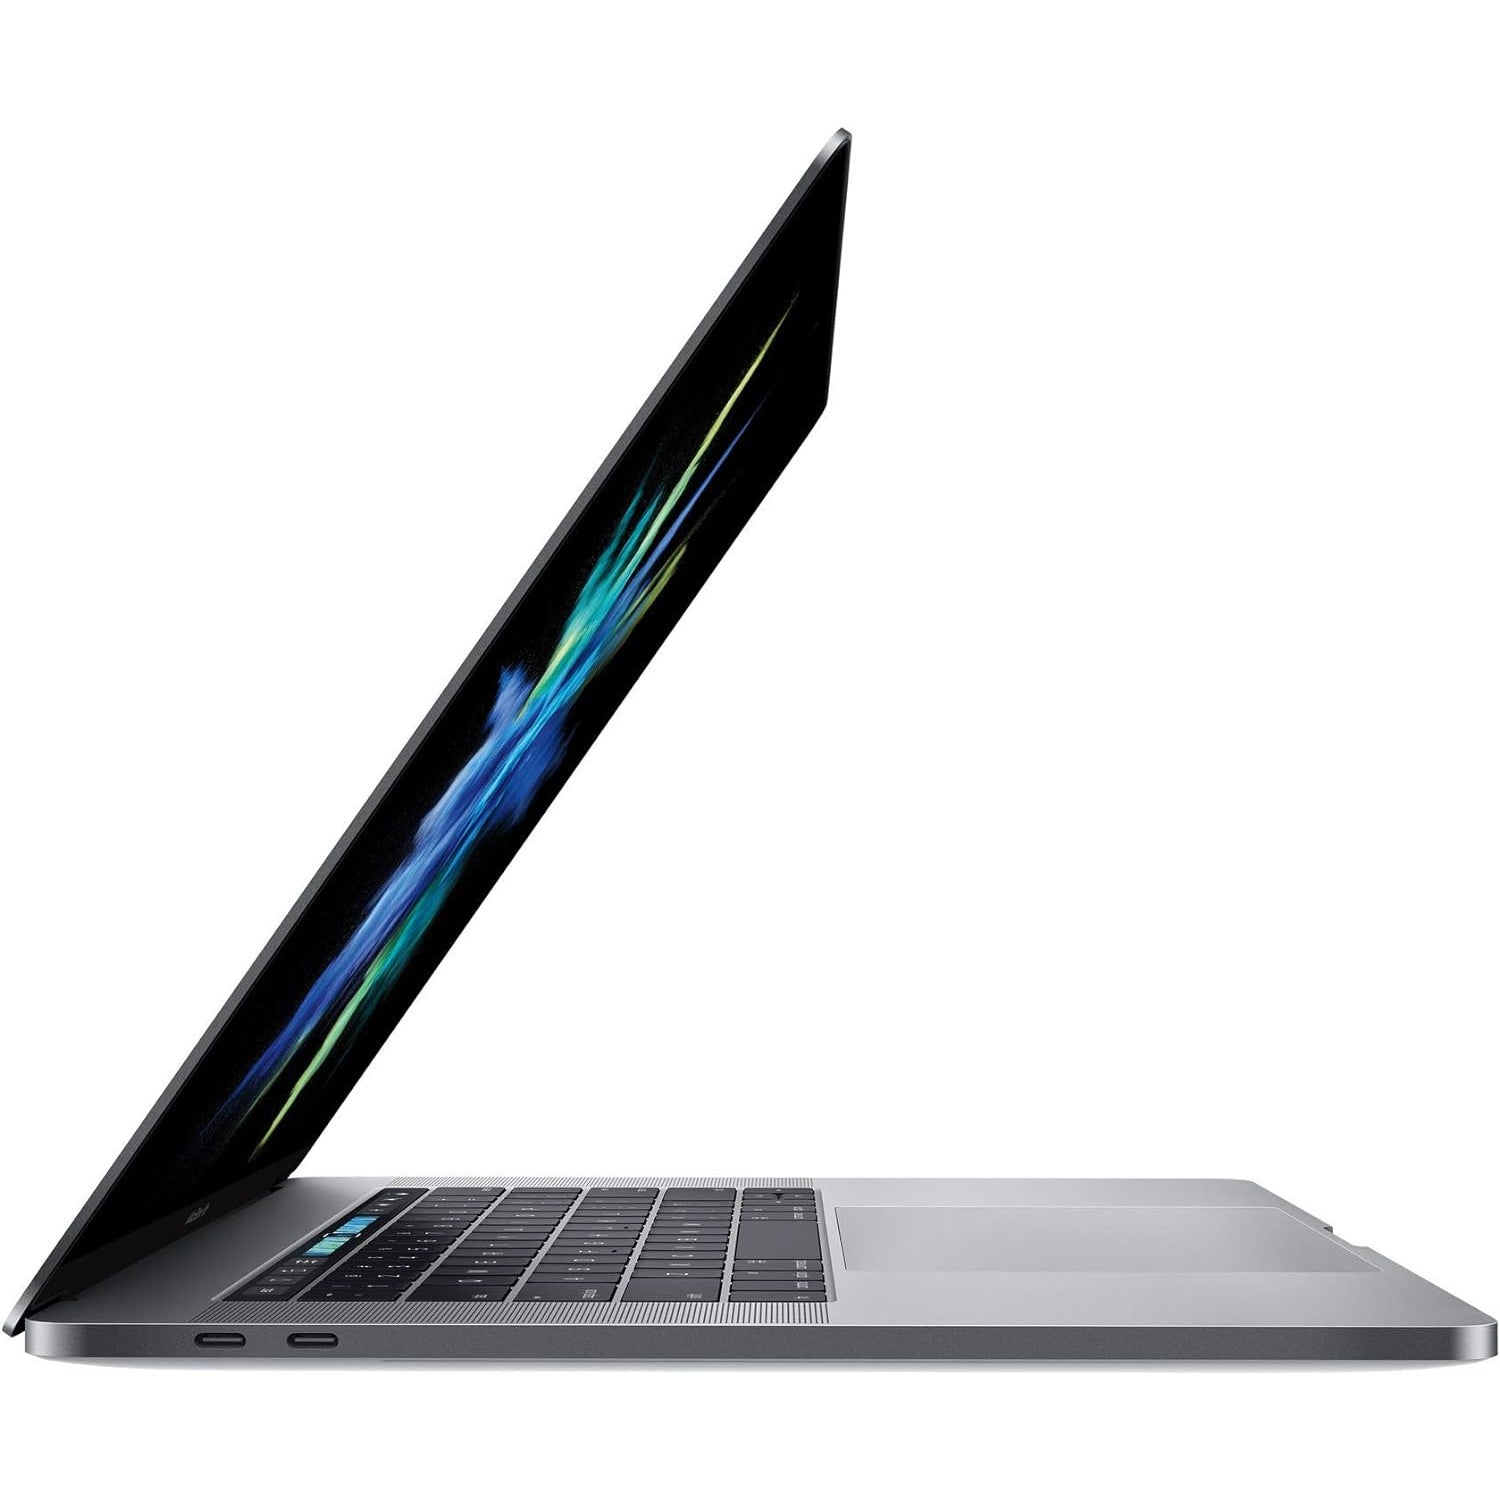 Apple MacBook Pro 15'' 2016 Intel Core i5-7267U 16GB 256GB - Space Grey - Excellent